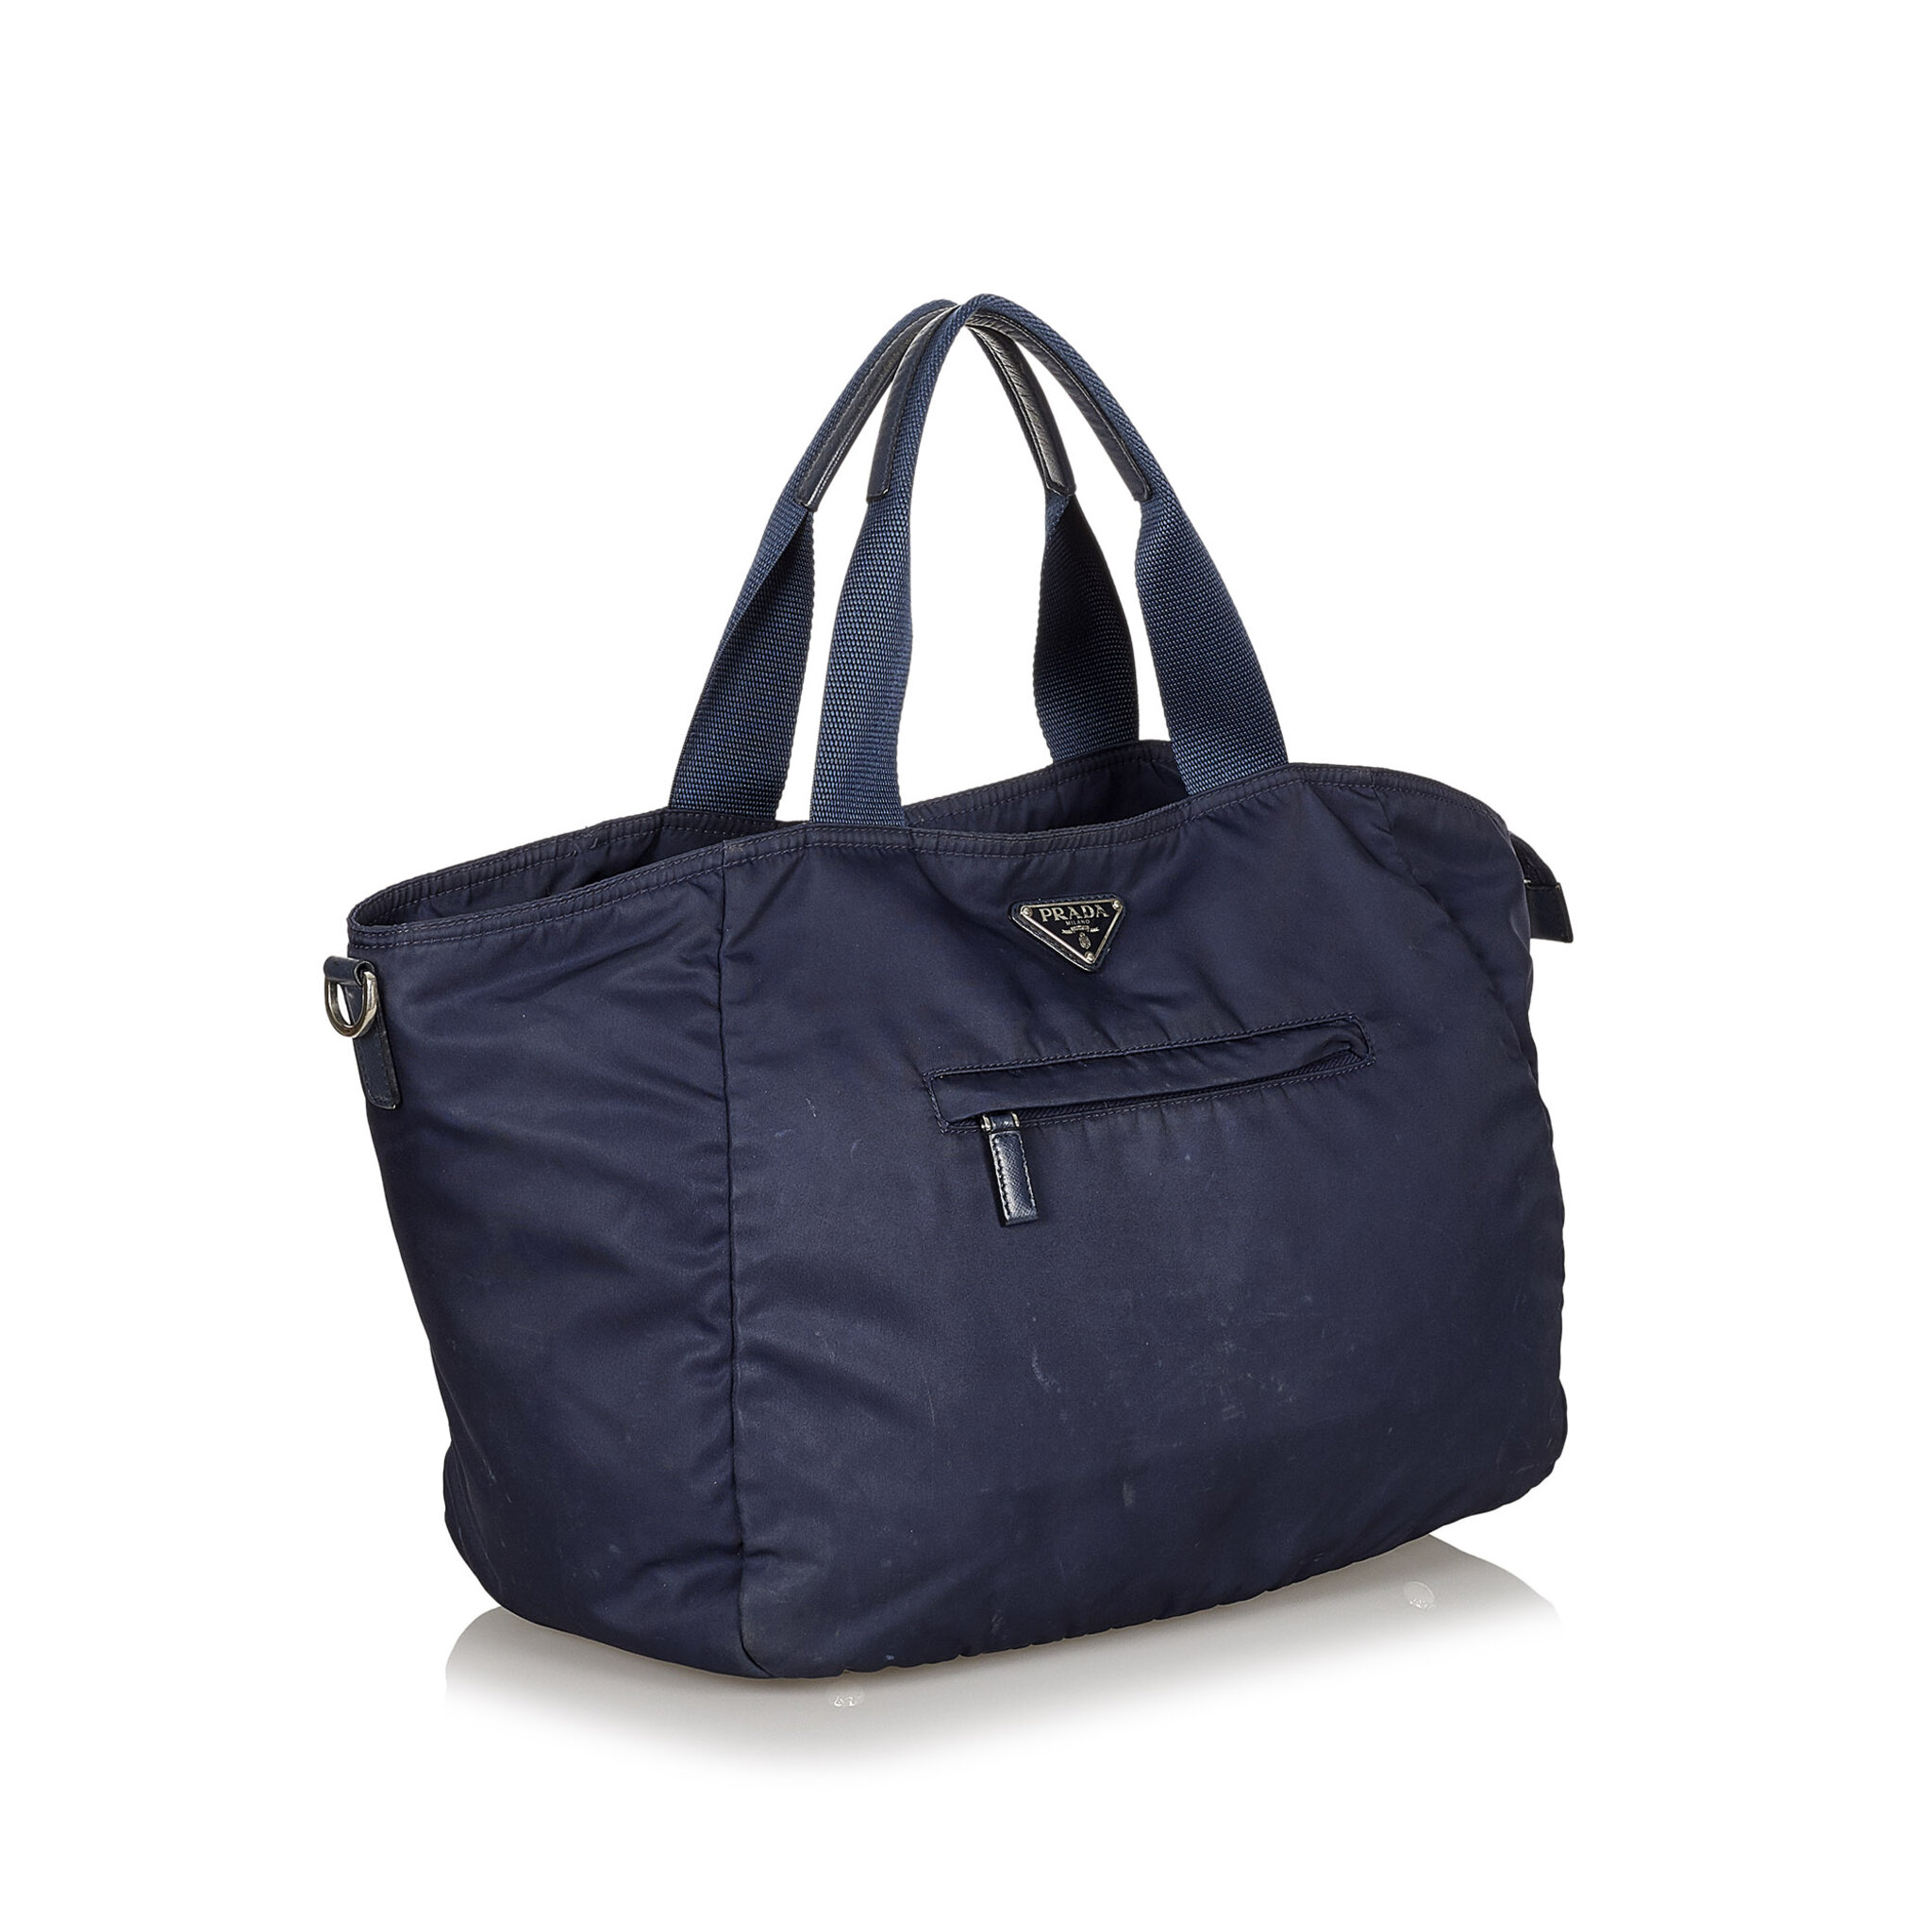 Prada Tessuto Travel Bag, ONESIZE, midnight blue